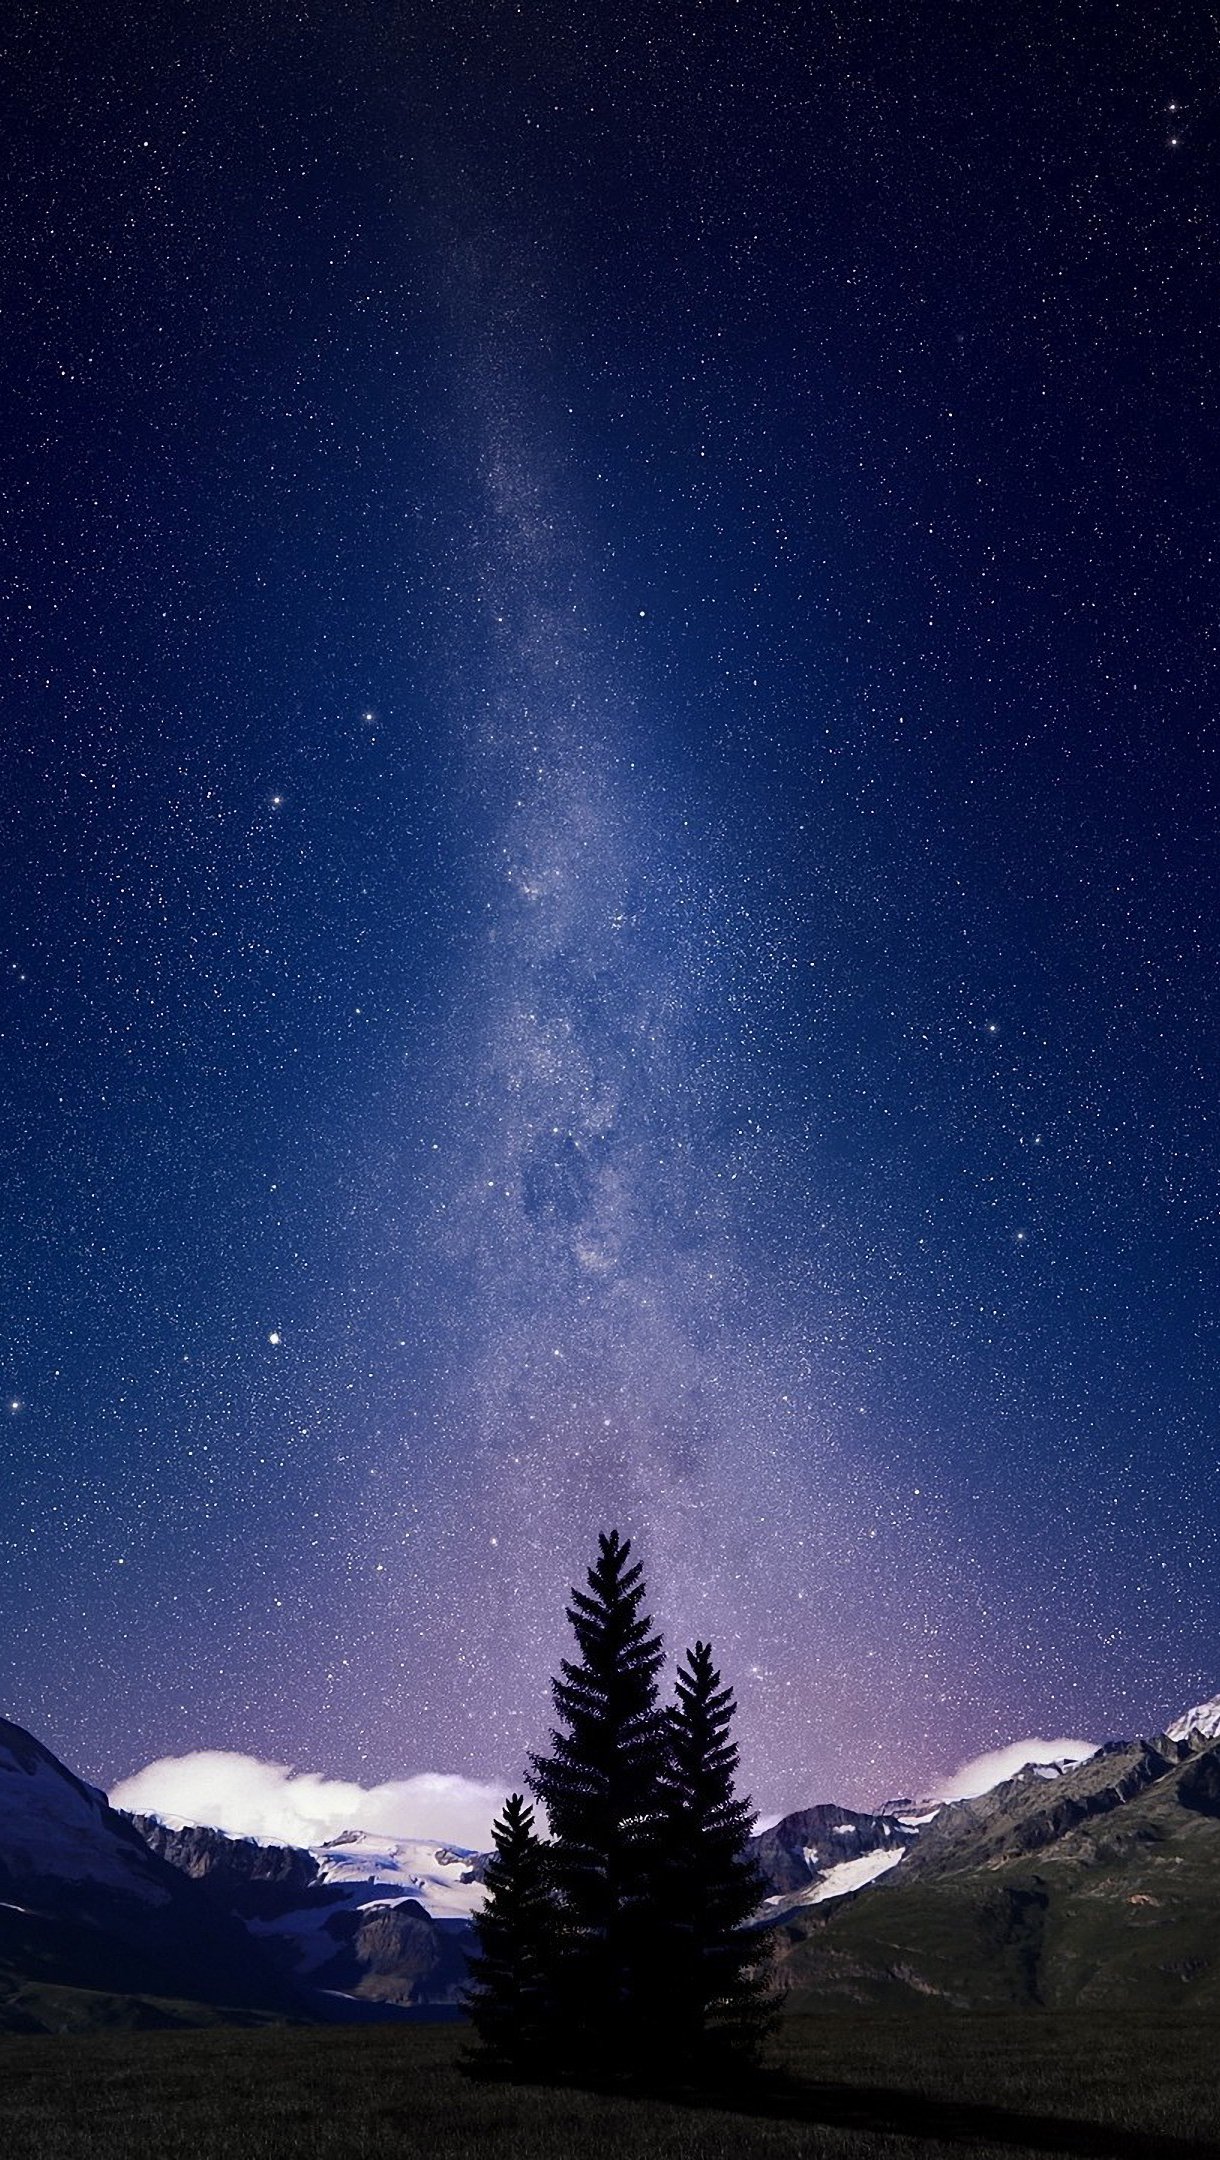 Billions Stars in The Night Sky 4K wallpaper download